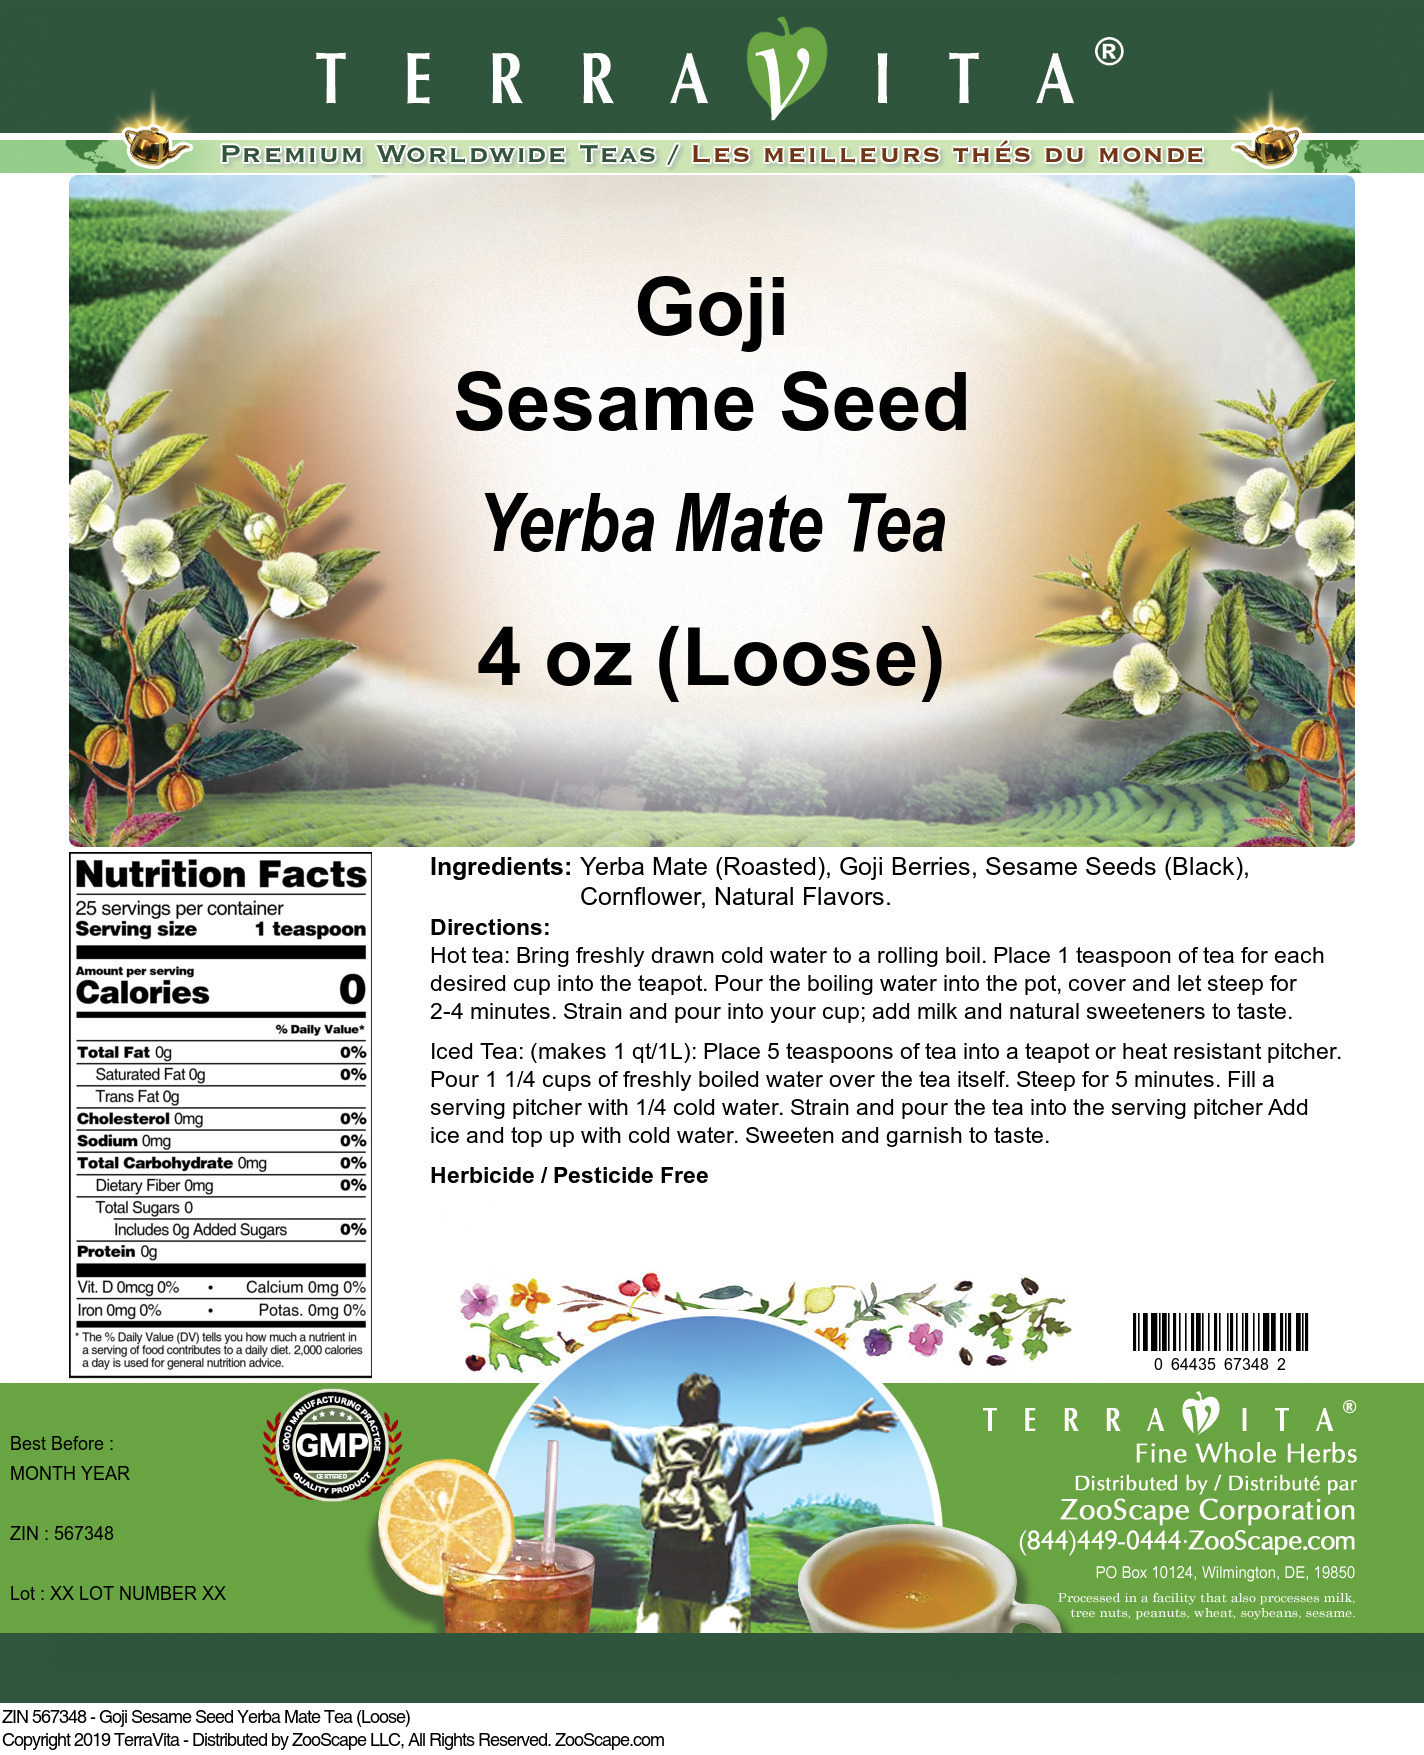 Goji Sesame Seed Yerba Mate Tea (Loose) - Label